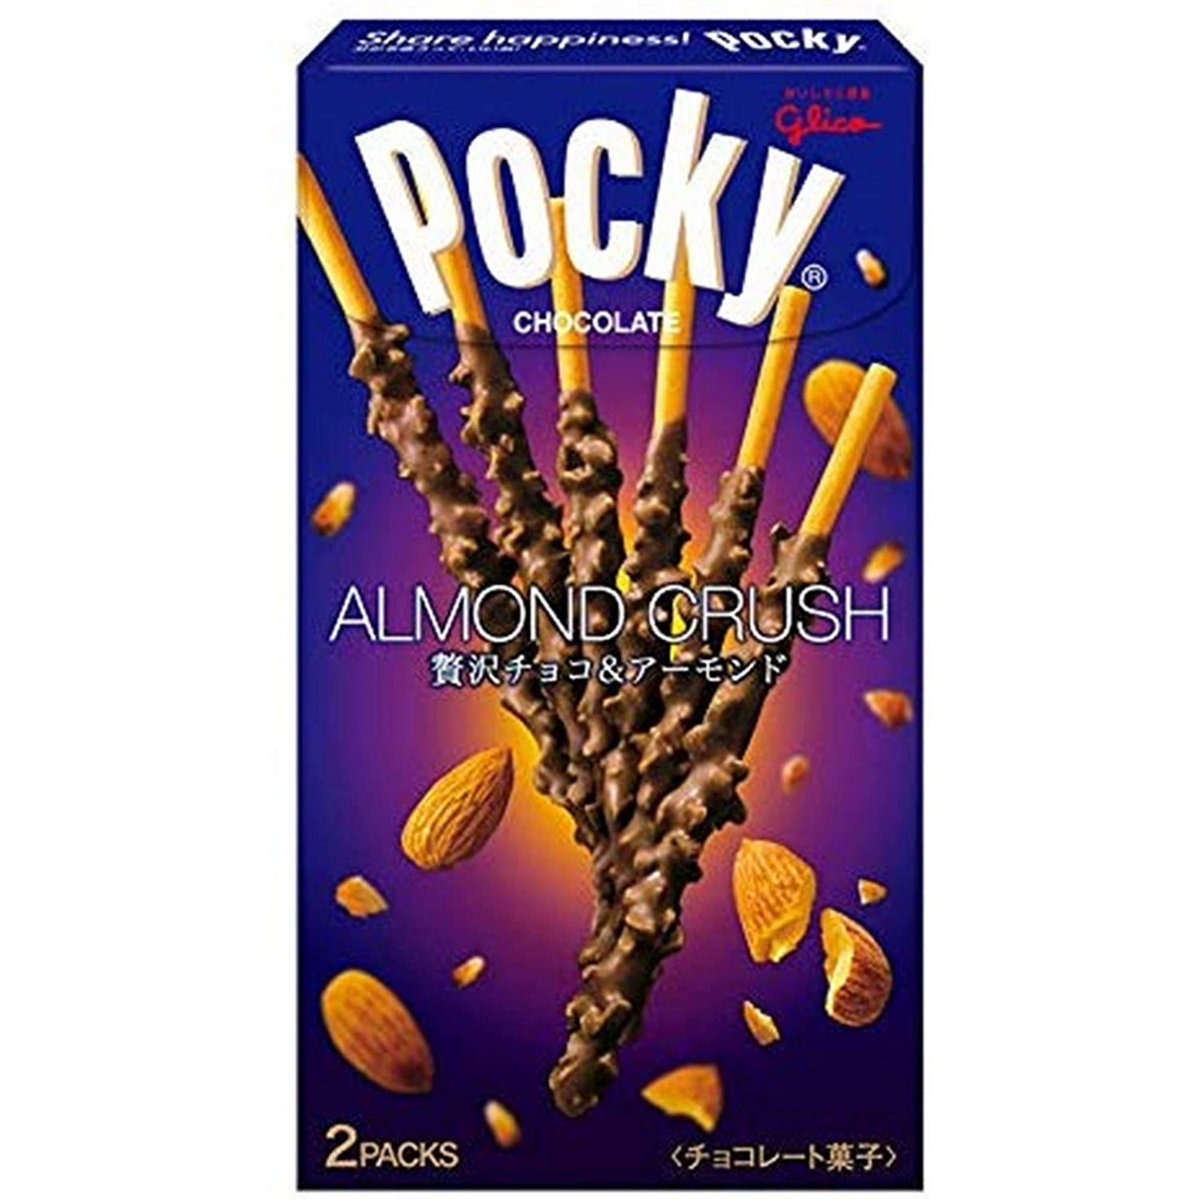 Pocky Almond Crush Japan